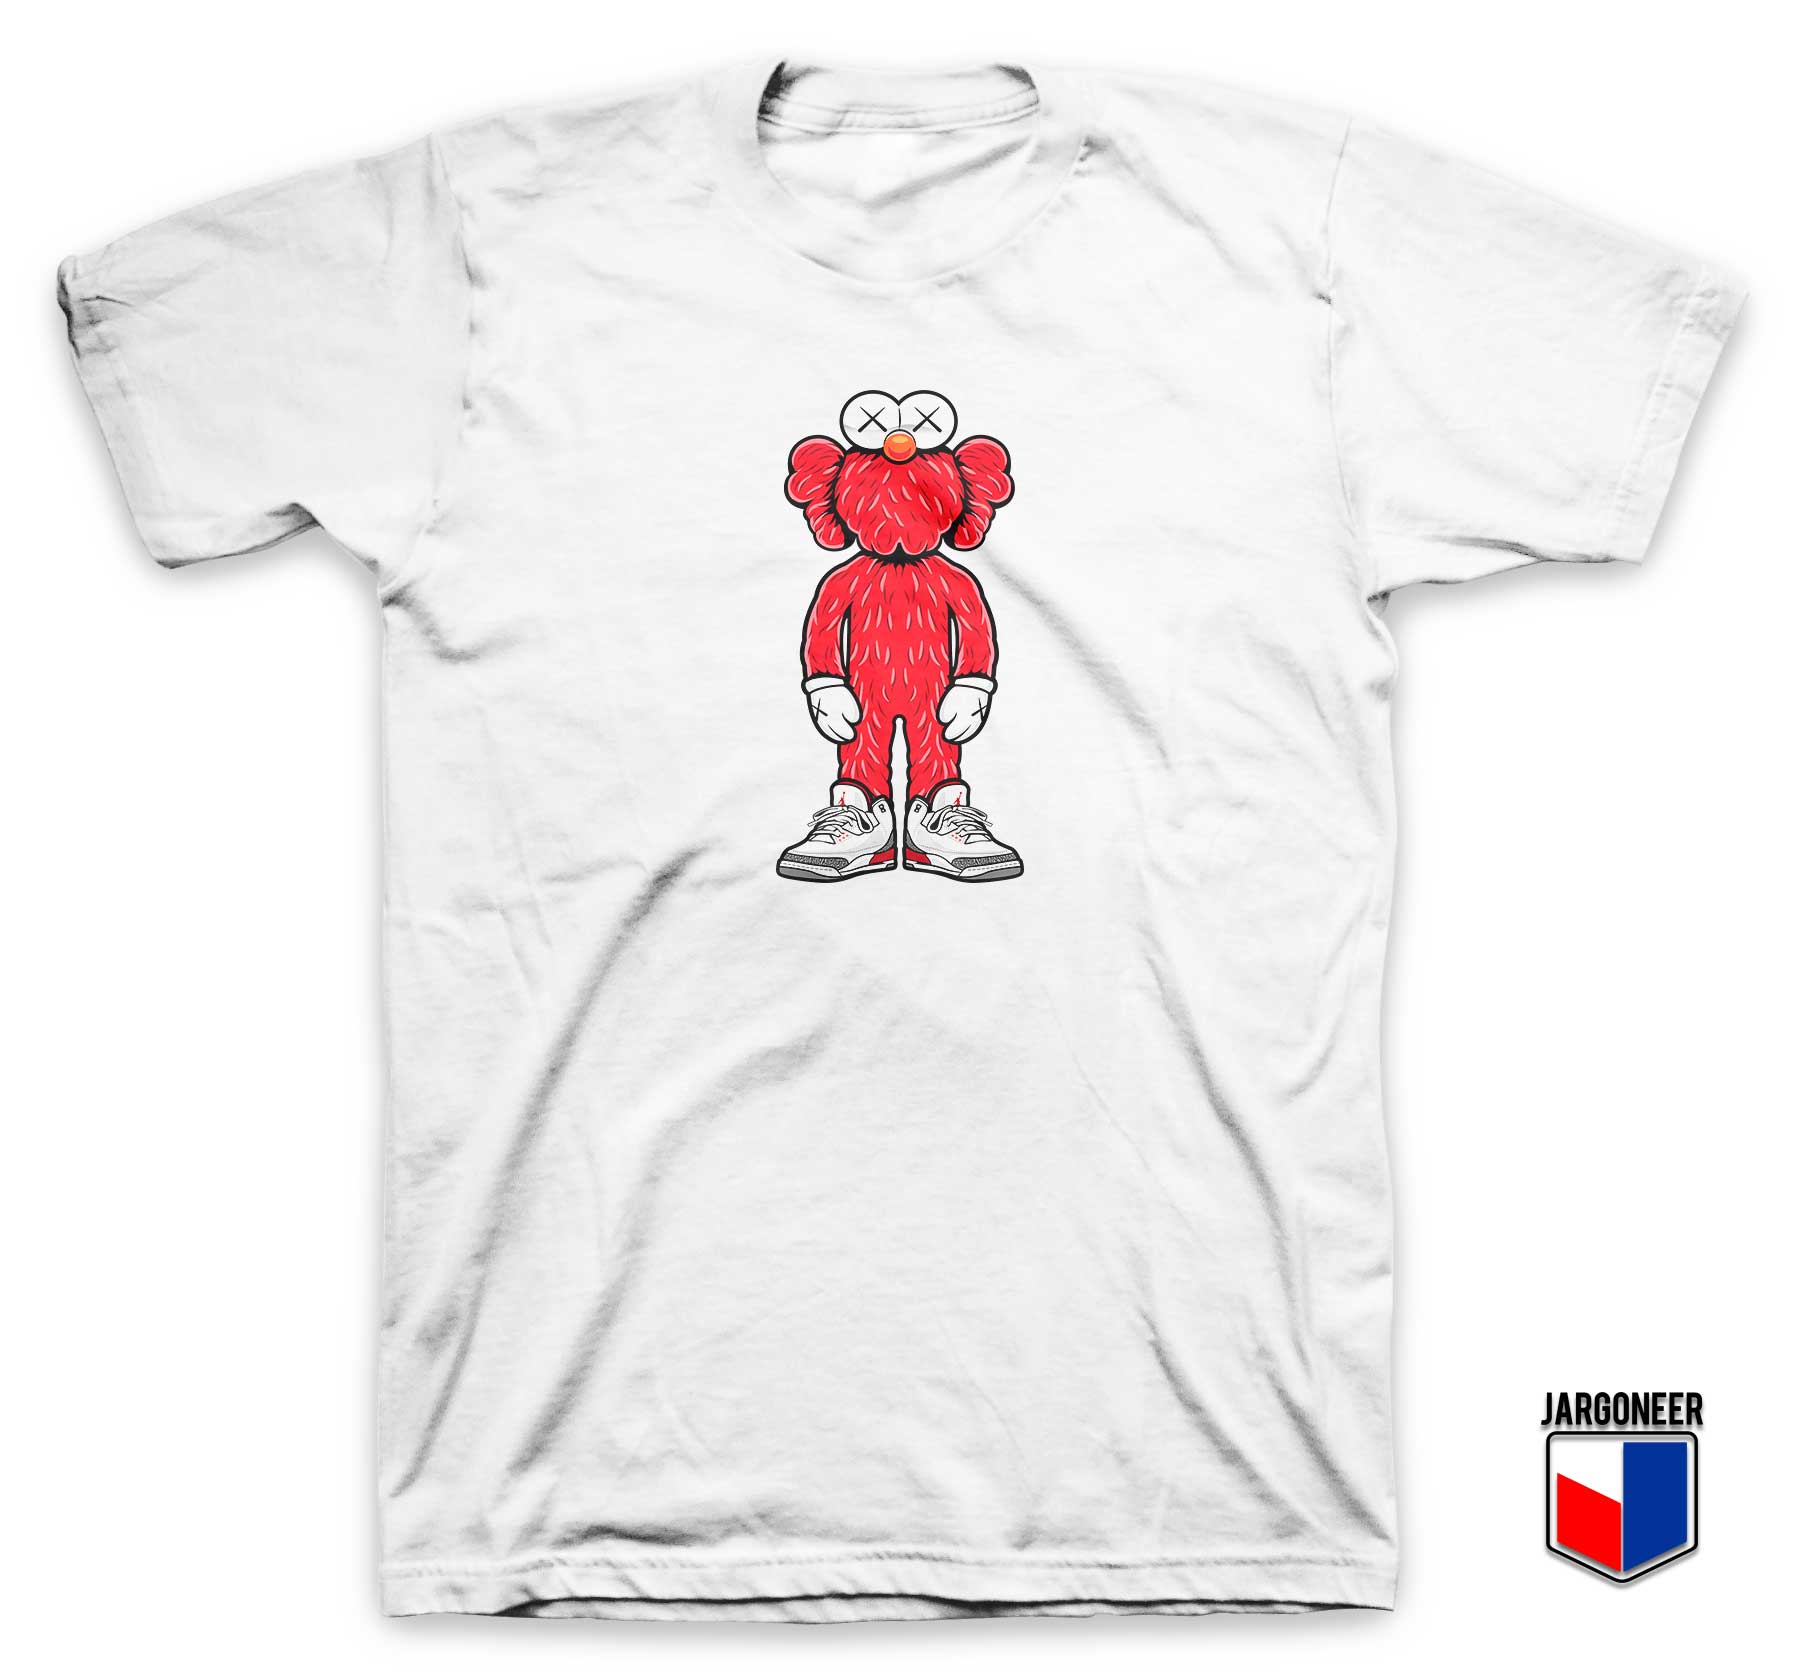 Sympathize background Score Cool Kaws X Elmo Parody T Shirt - Custom Design By jargoneer.com